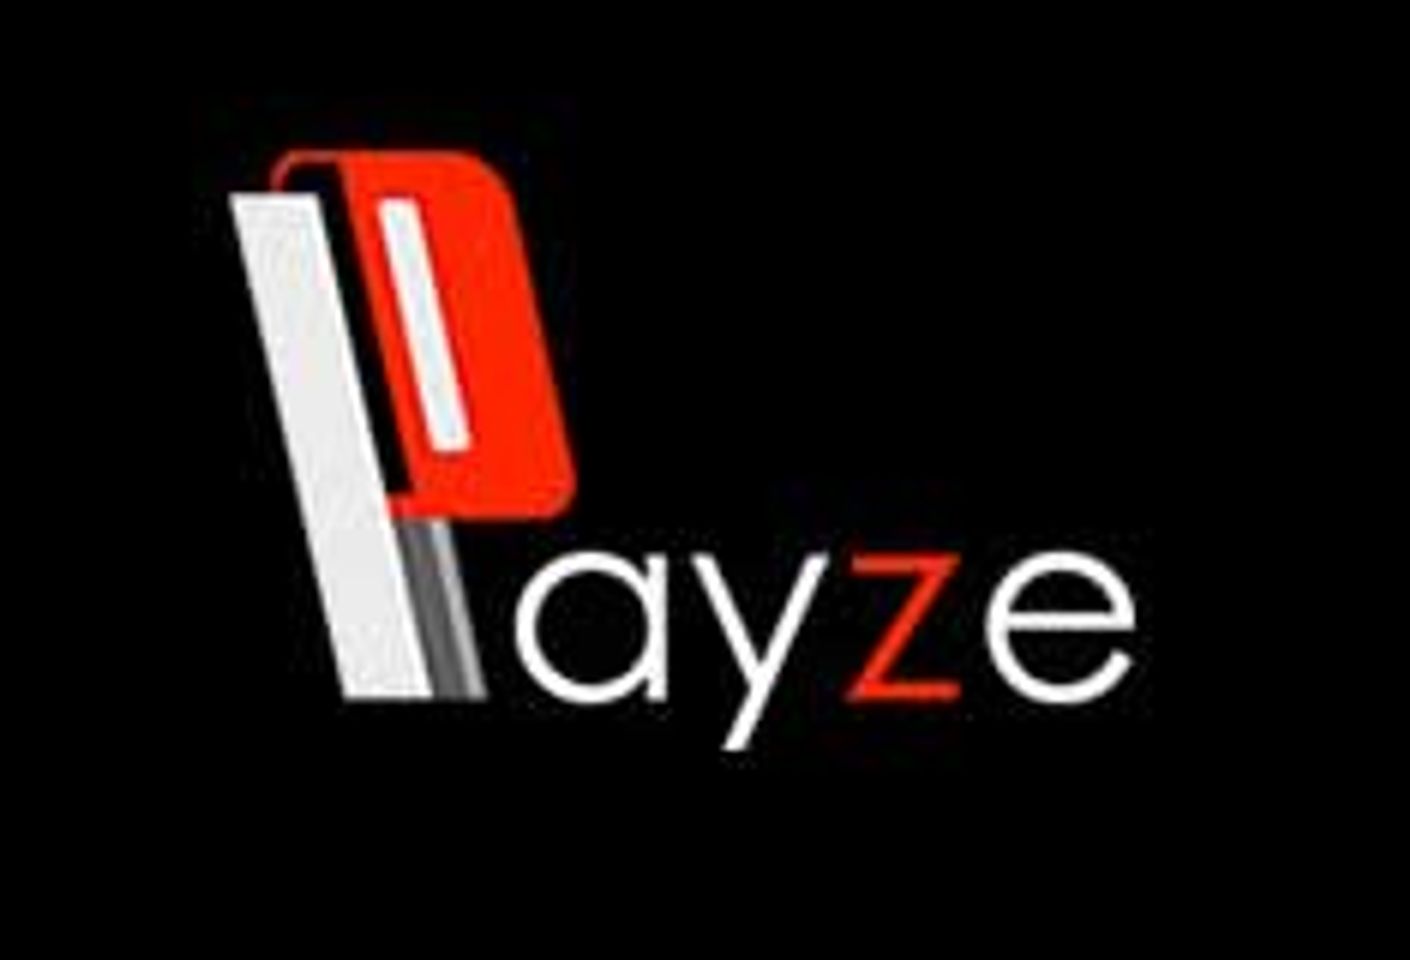 Payze is Happy Gold Sponsor of Phoenix Forum